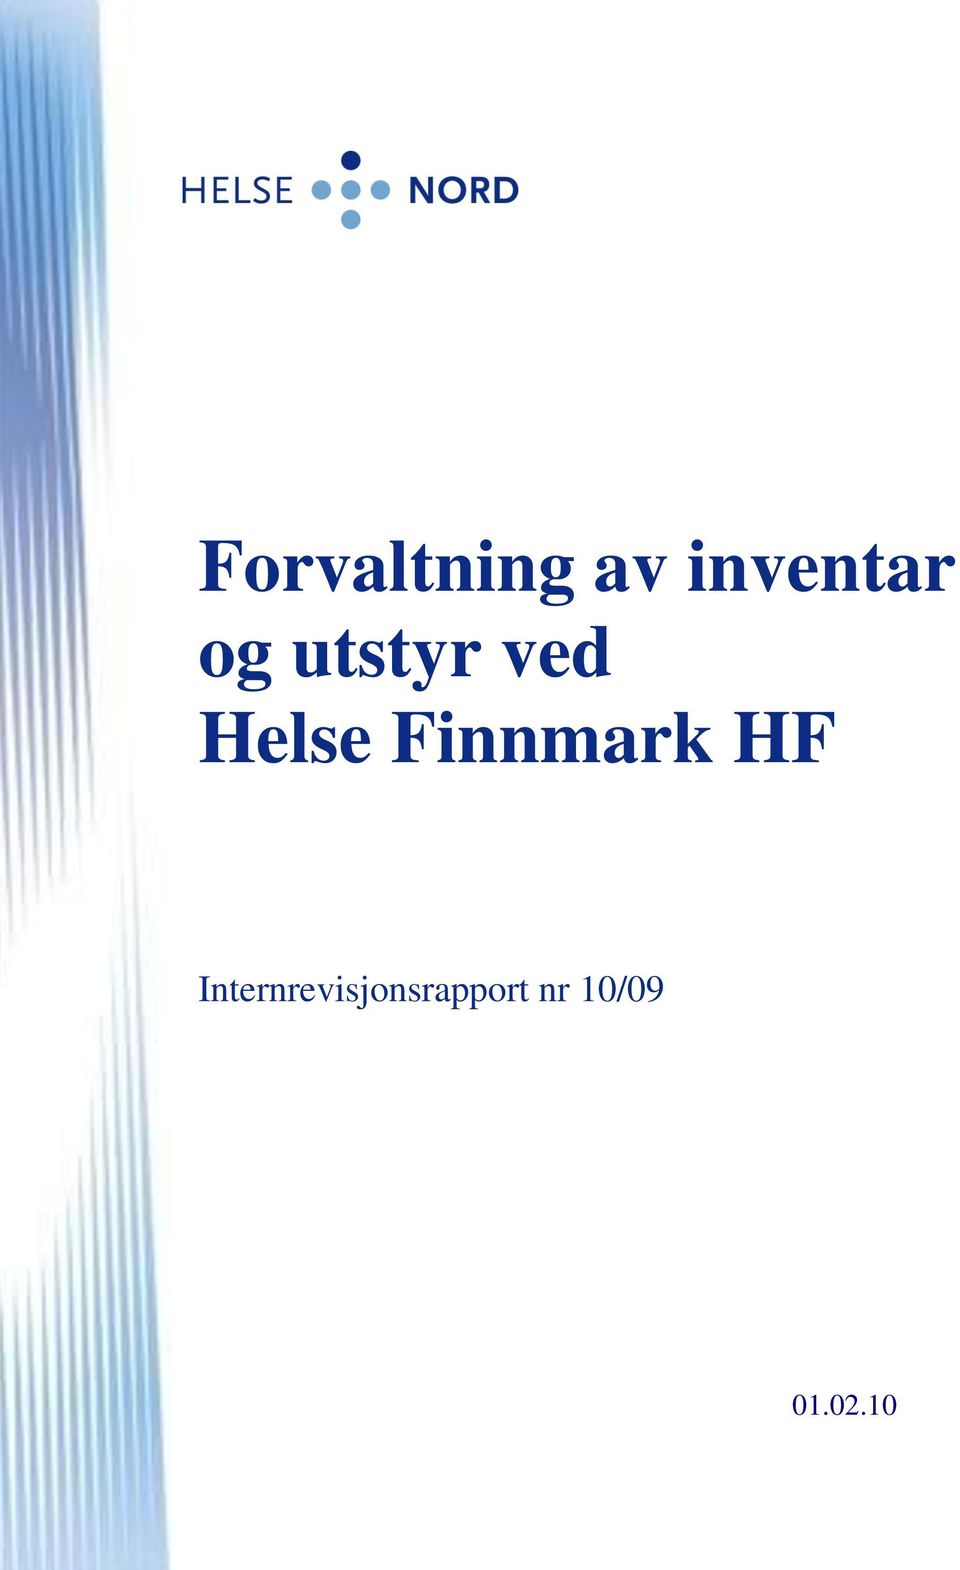 Finnmark HF